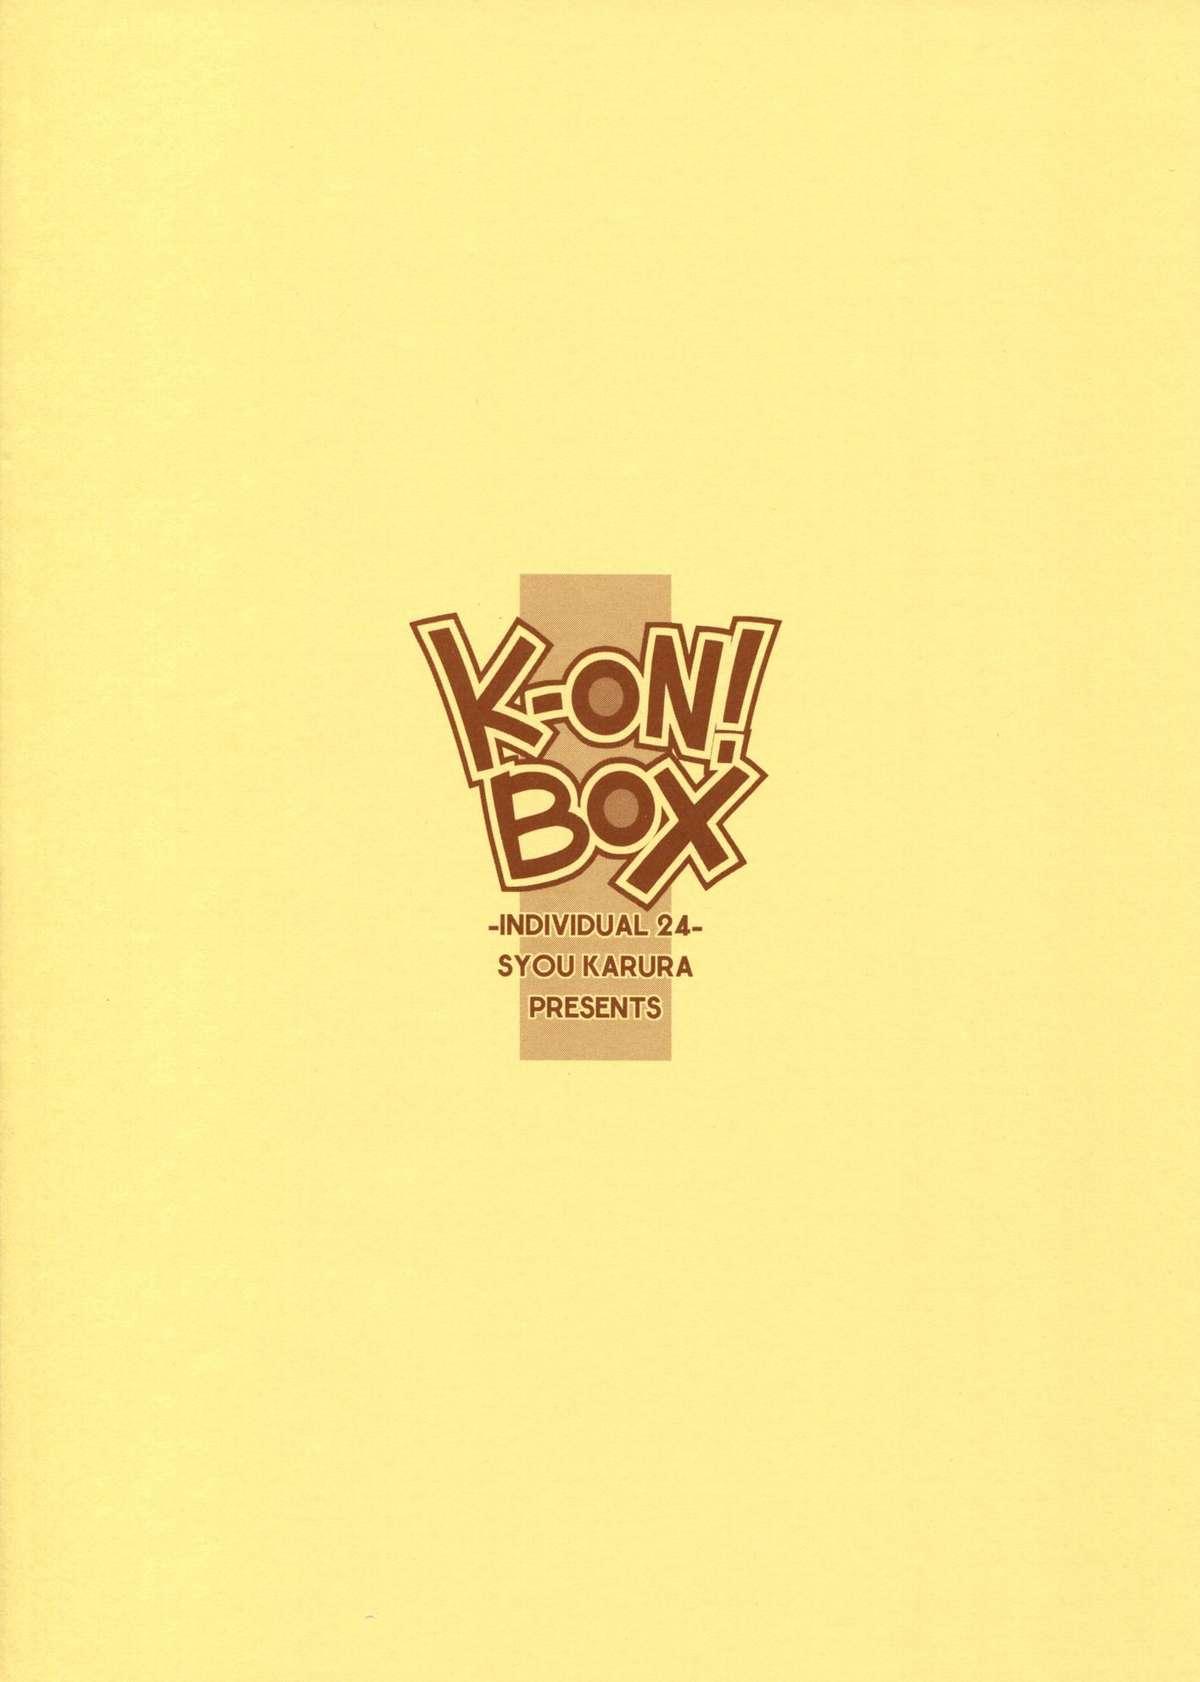 K-ON! BOX 14